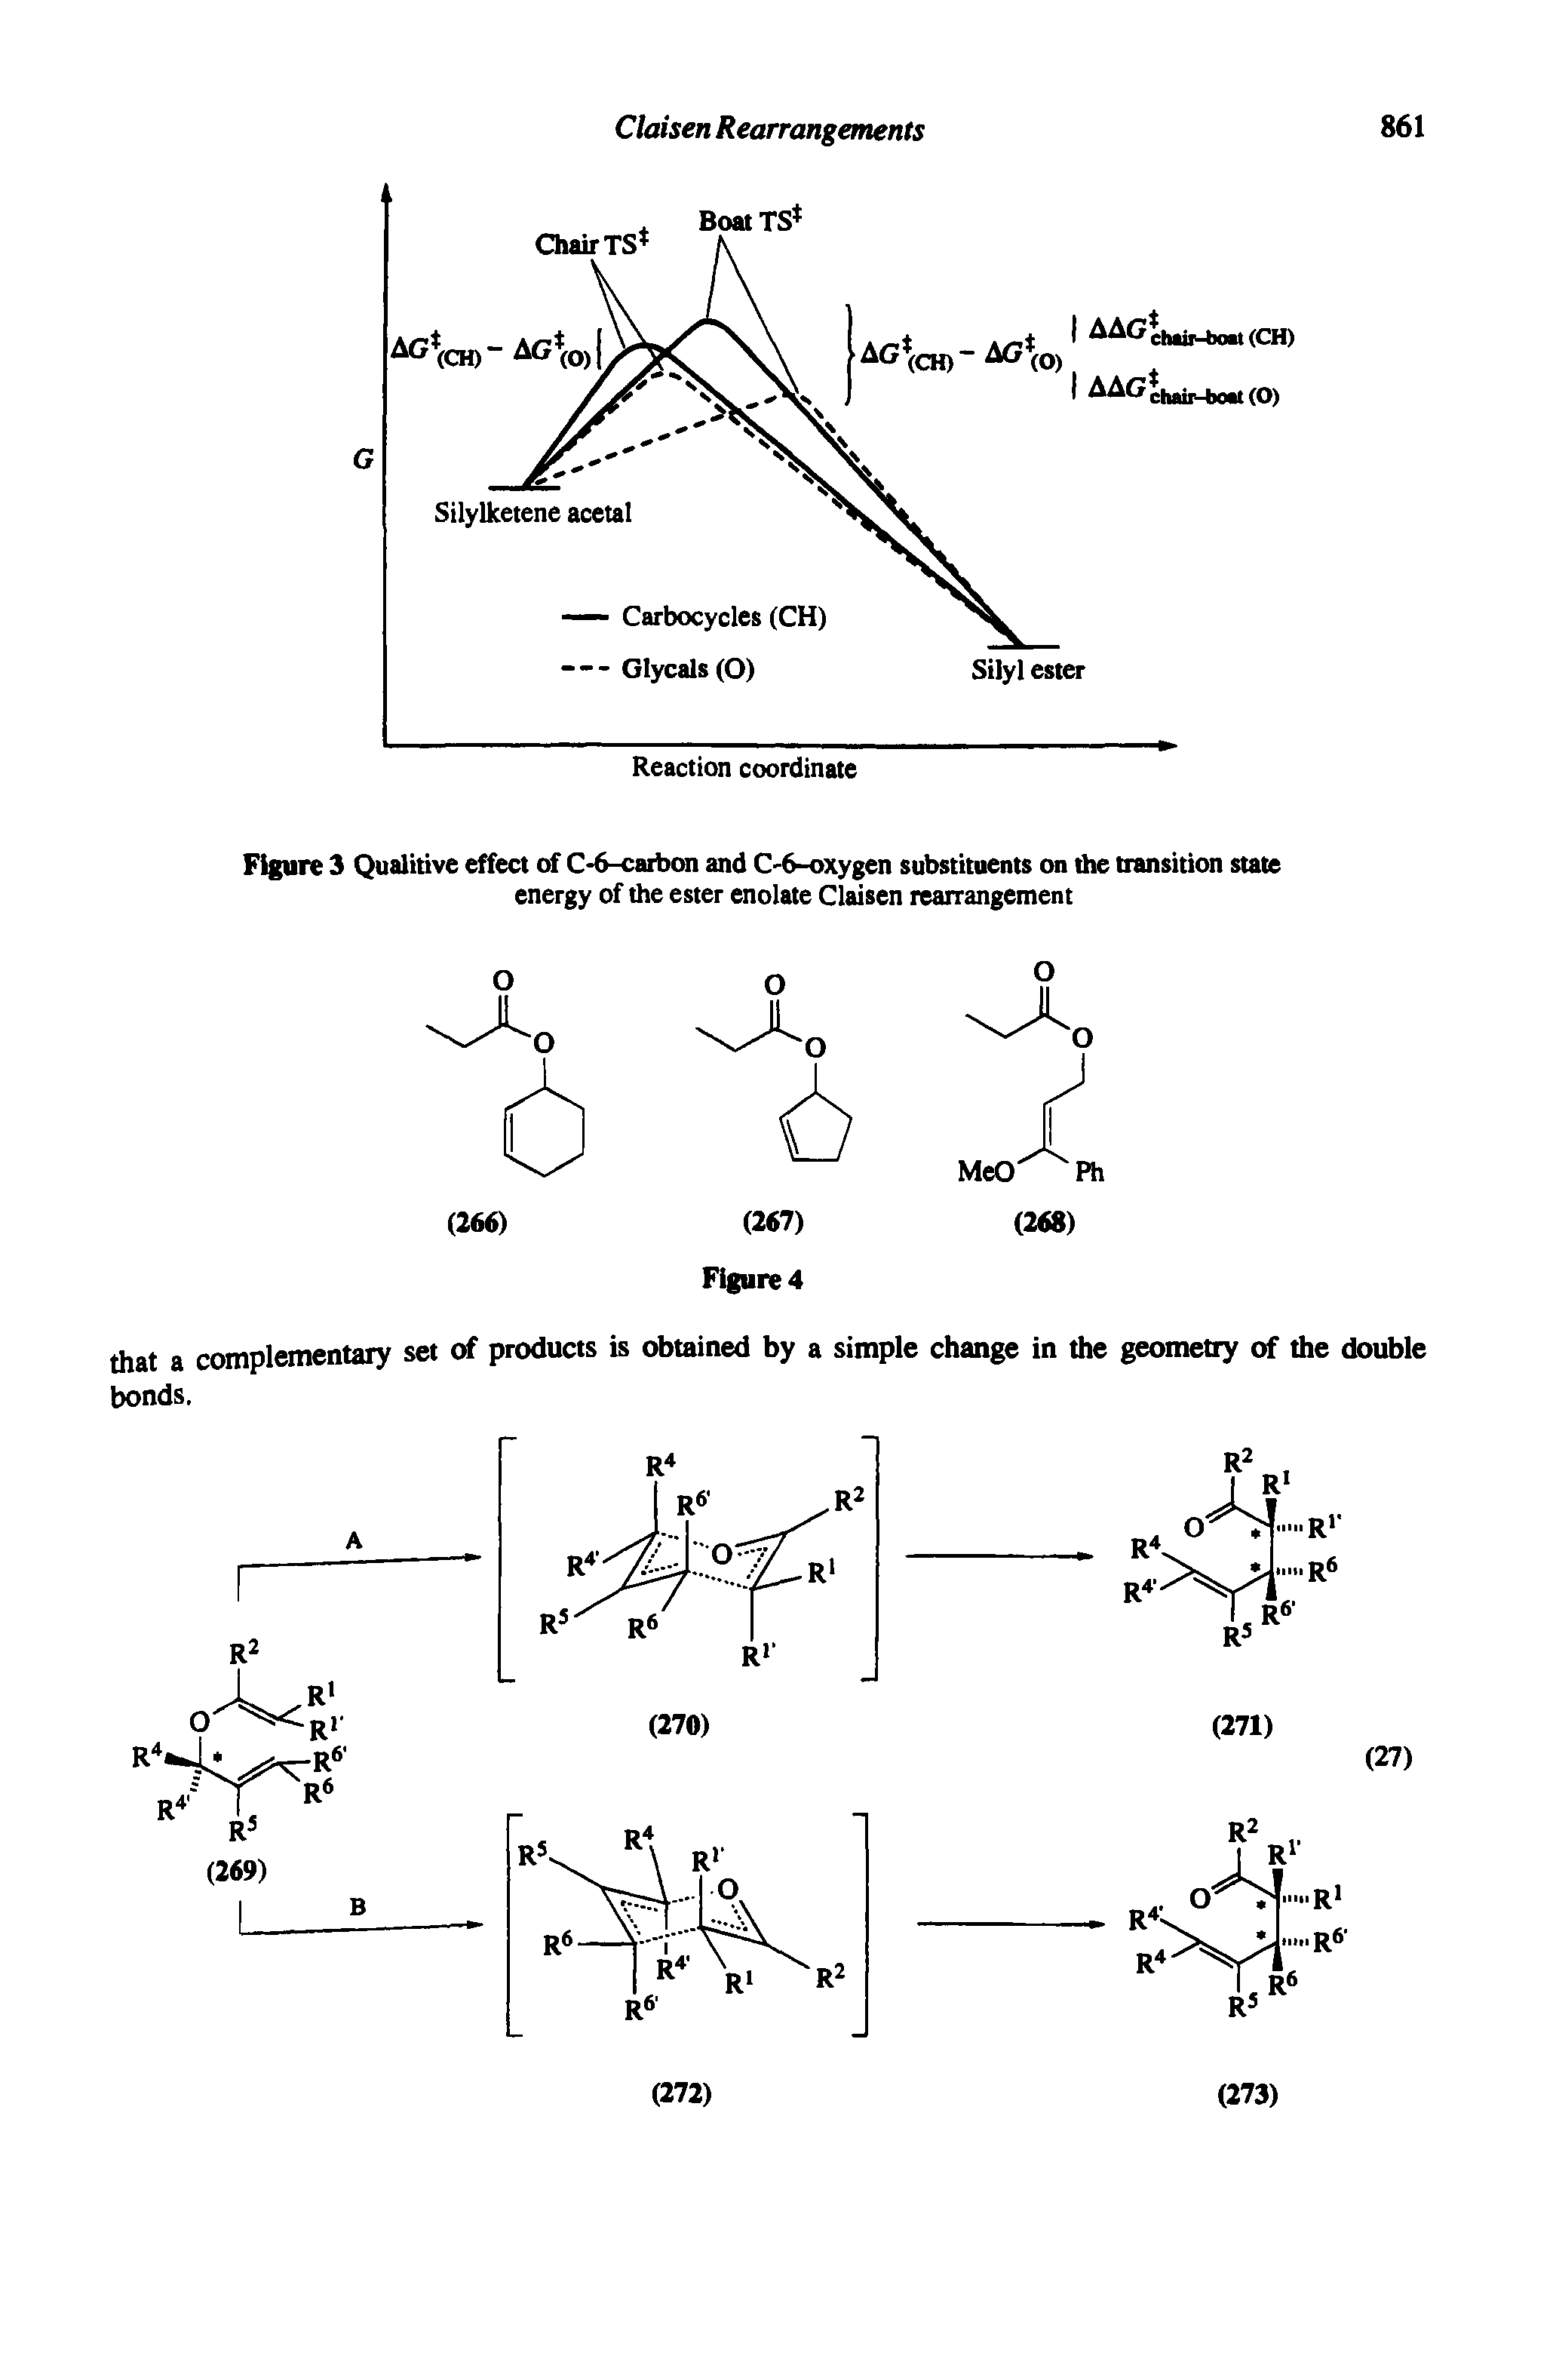 Figure 3 Qualitive effect of C-6-caibon and C 6-oxygen substituents on the transition sute energy of the ester enolate Claisen rearrangement...